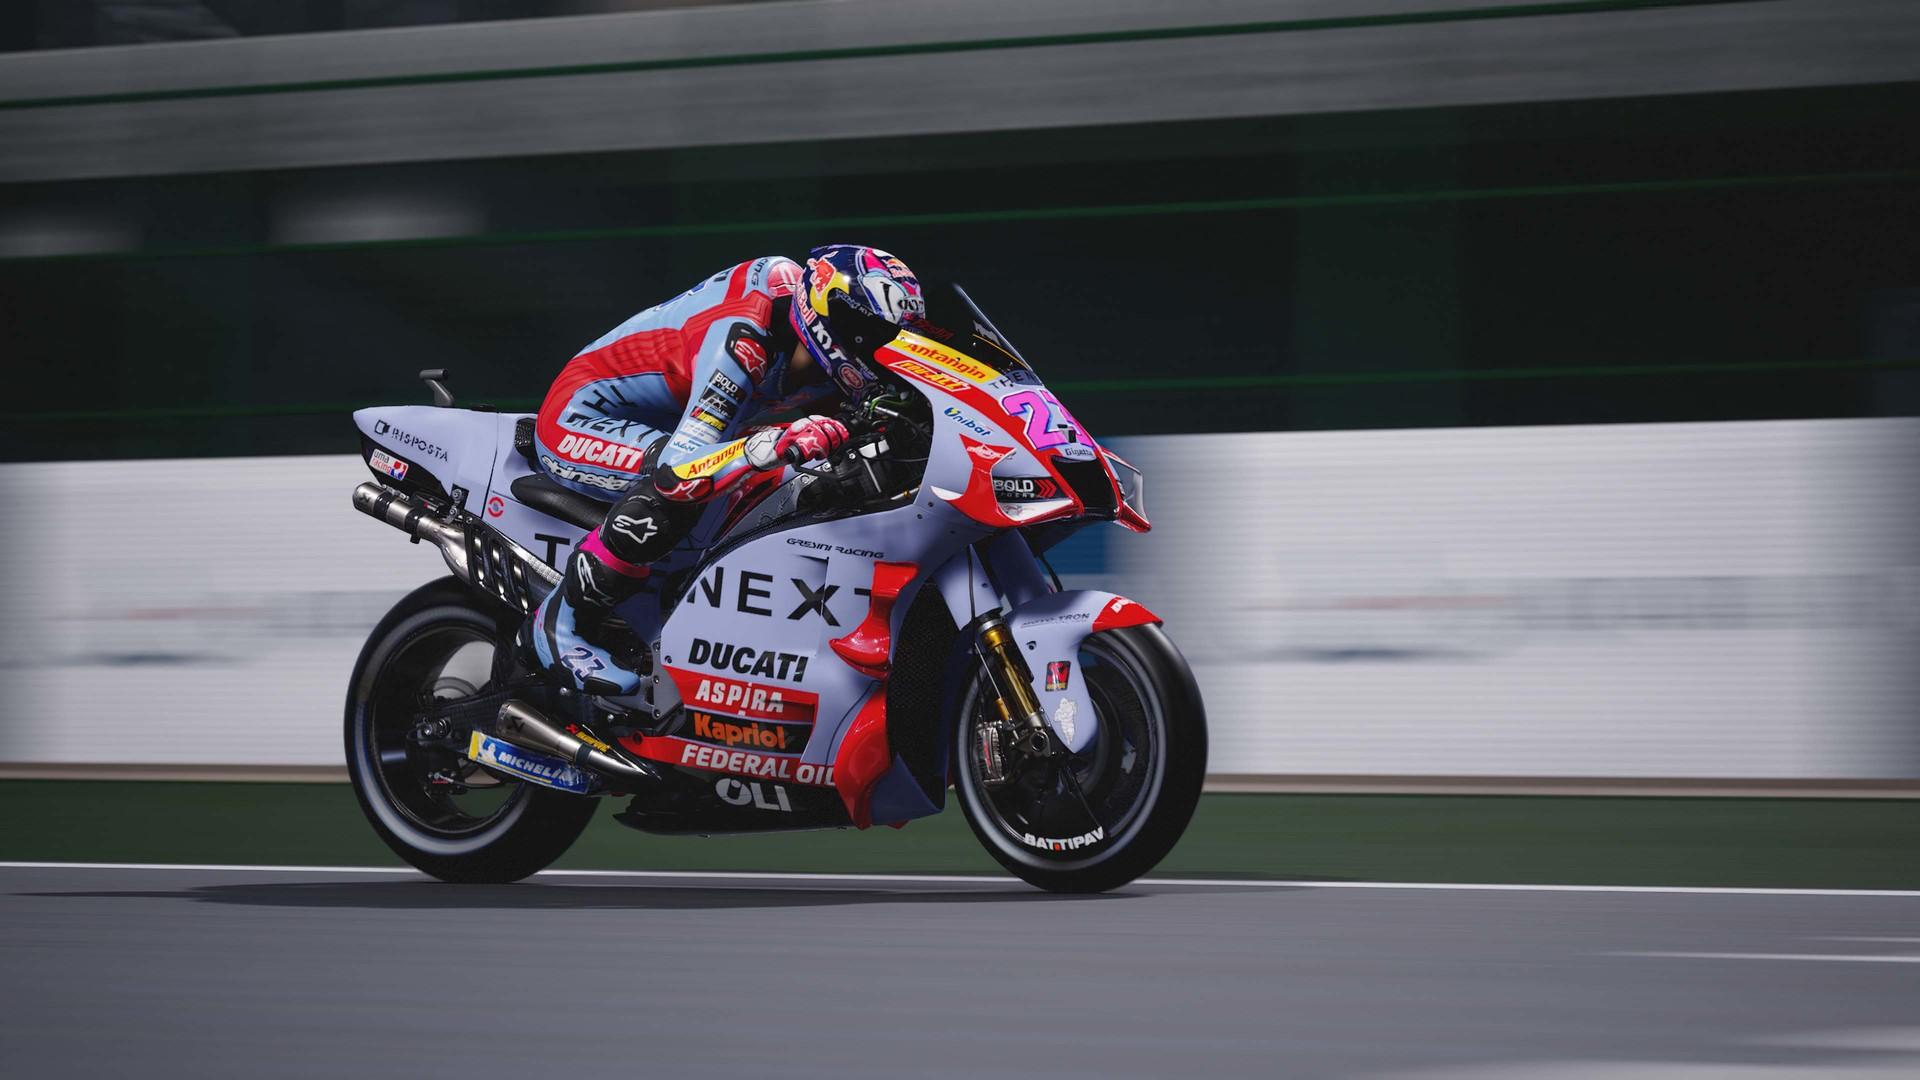 Screenshot №5 from game MotoGP™22